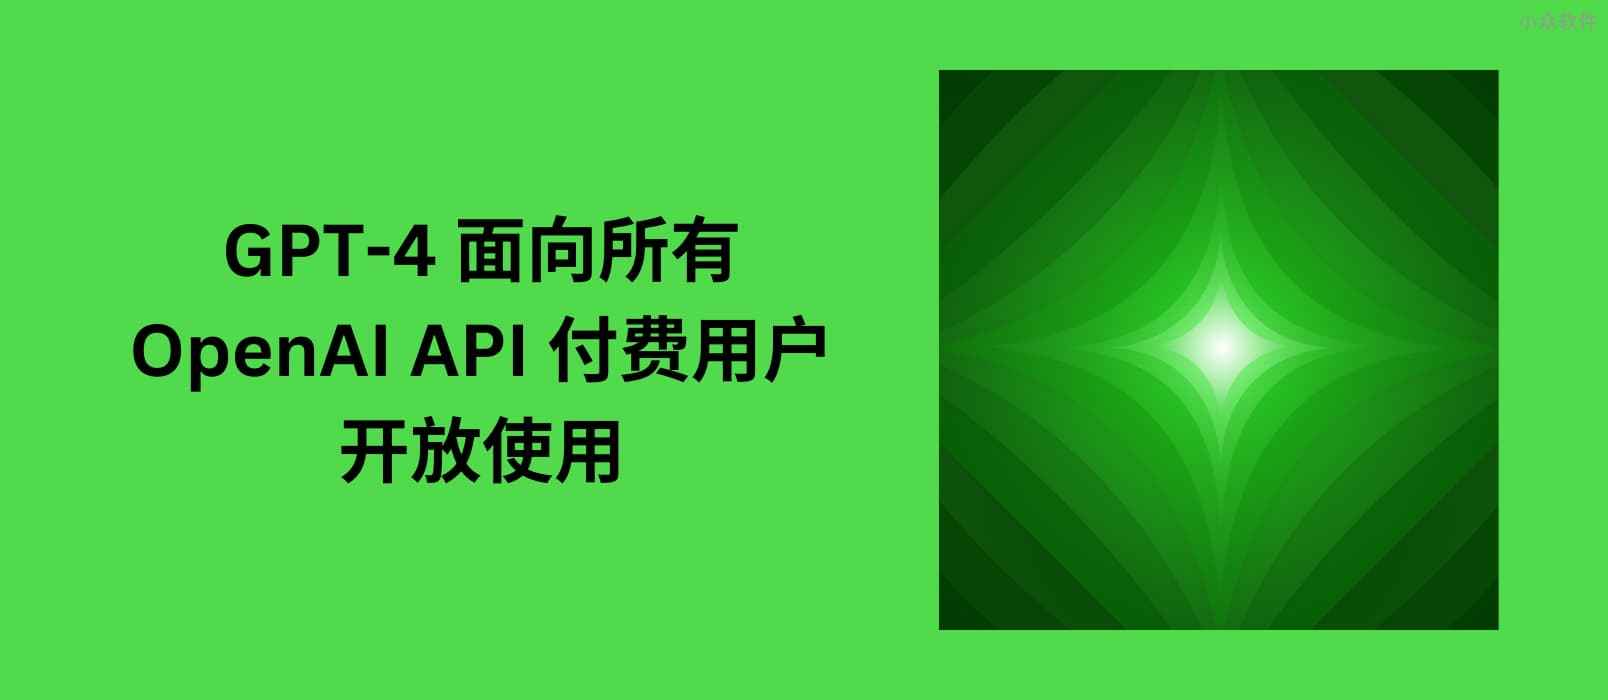 GPT-4 面向所有 OpenAI API 付费用户开放使用